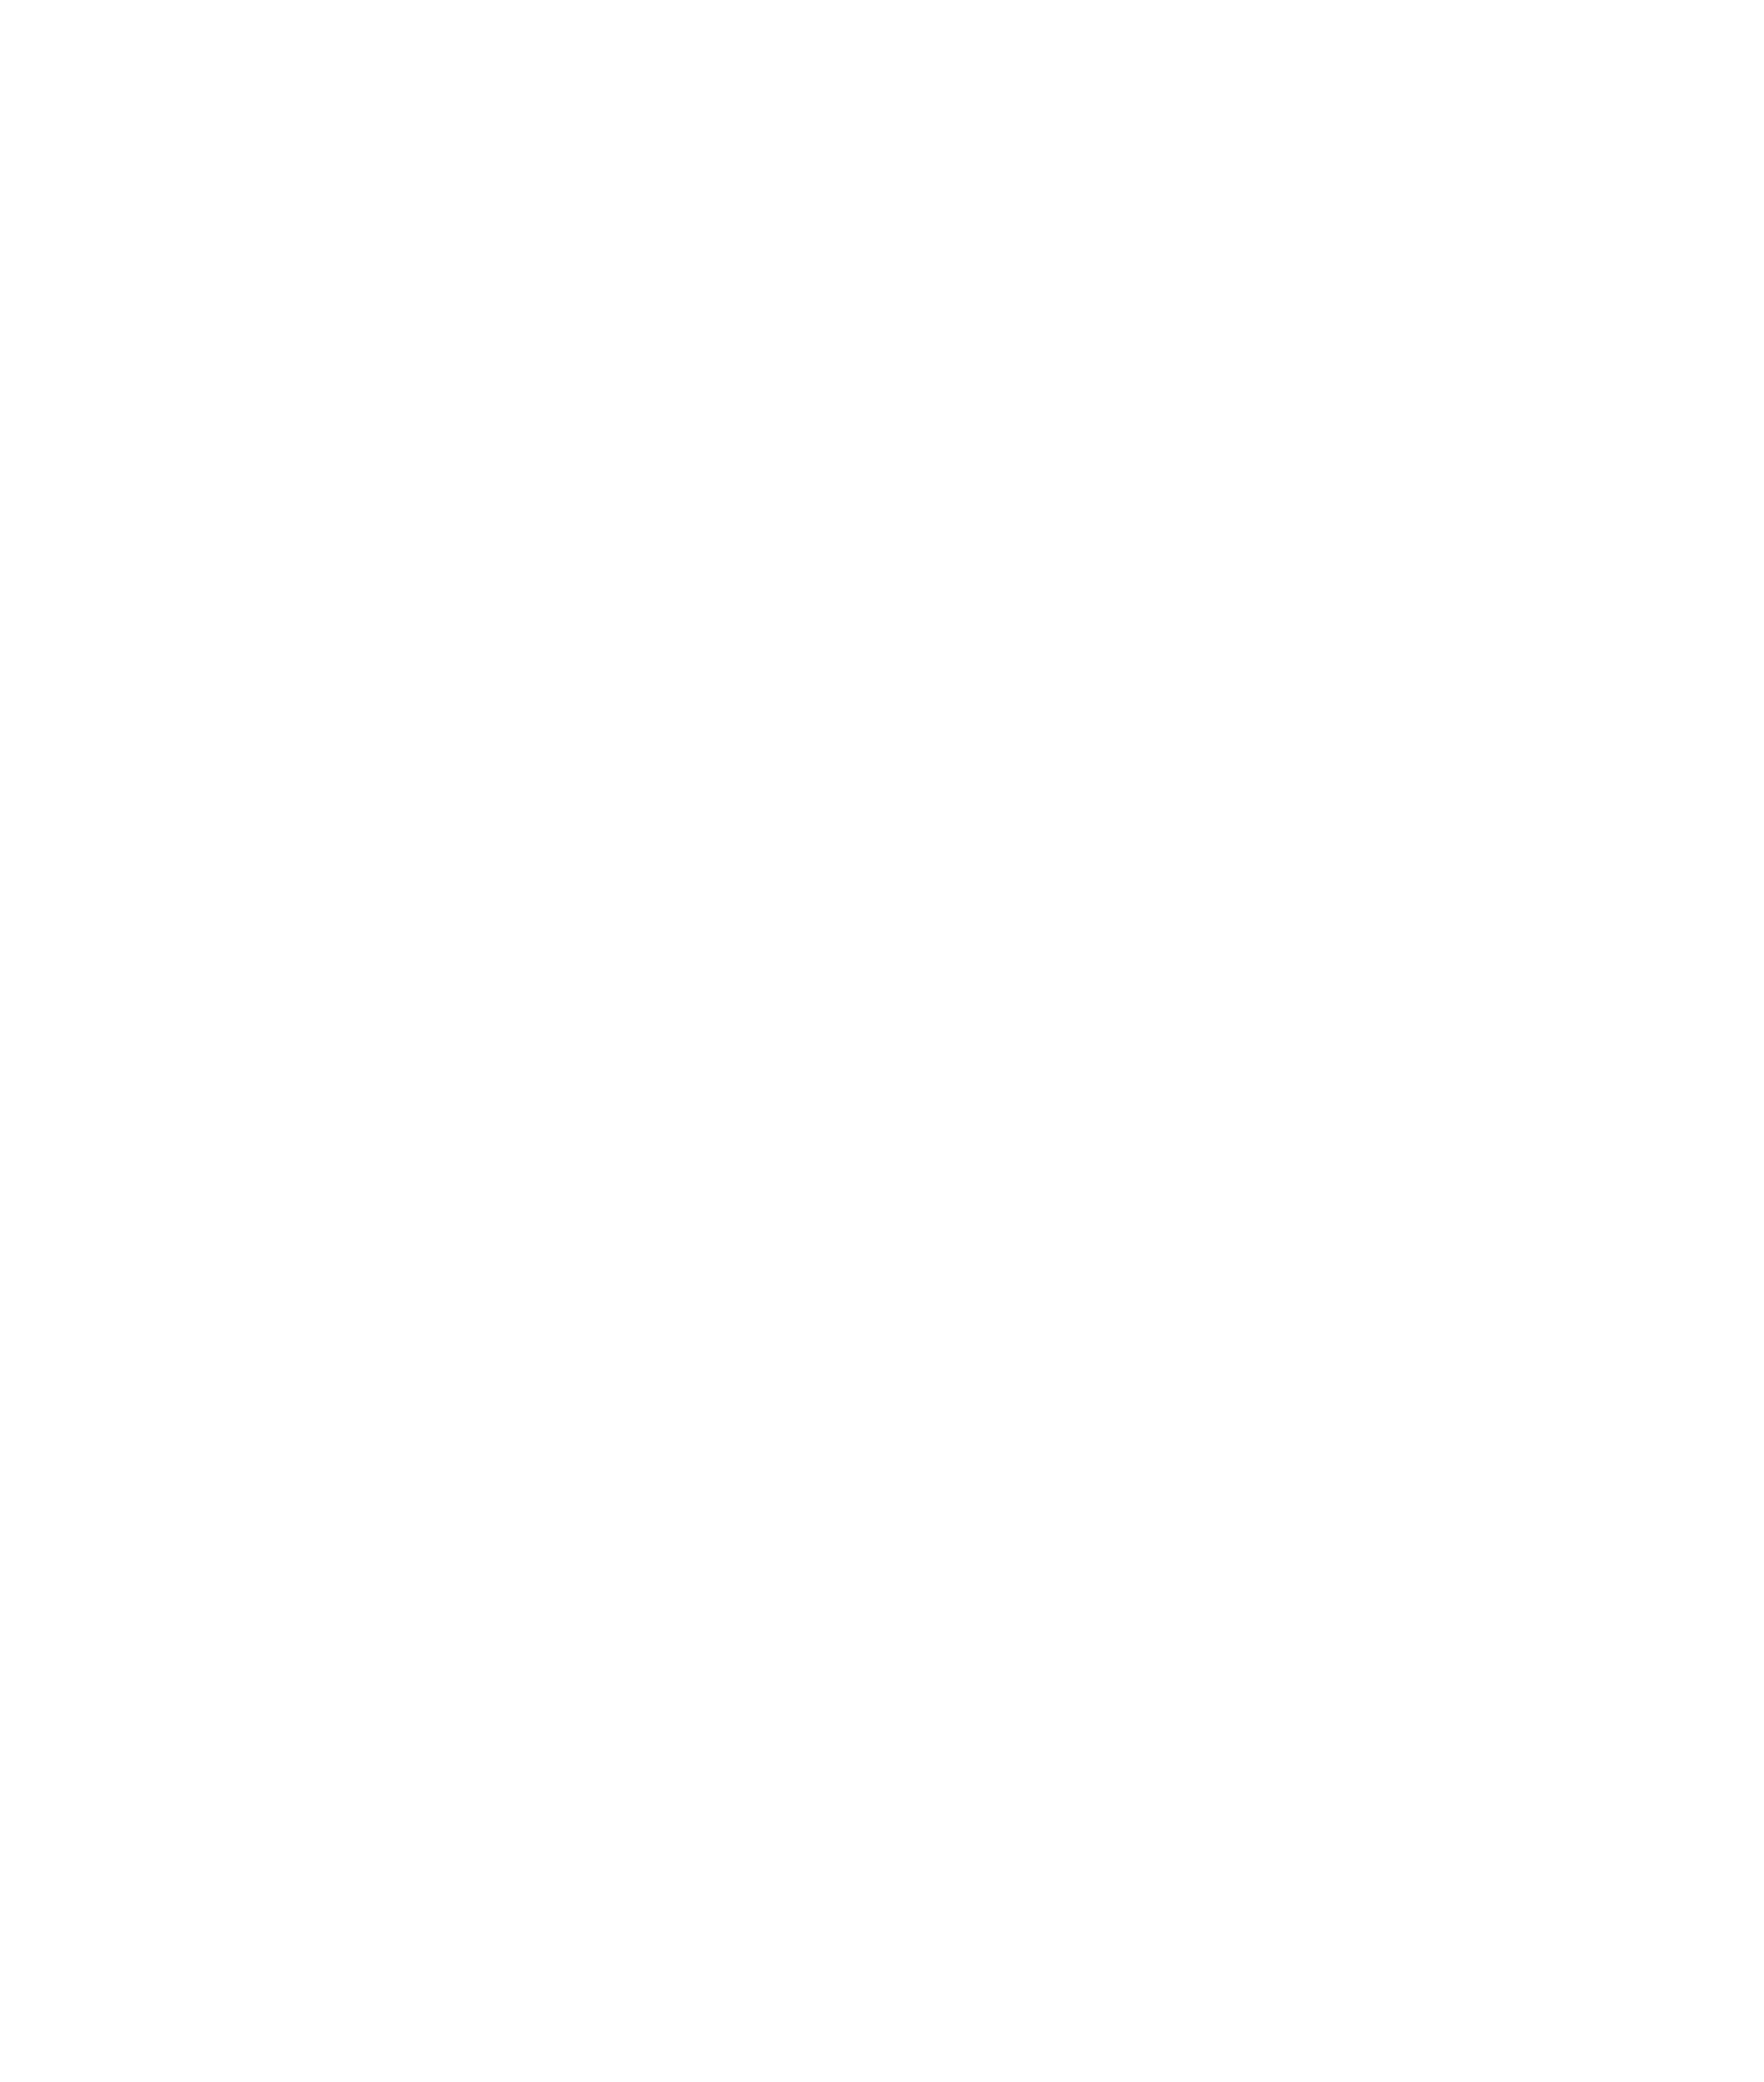 FIDE World Youth Chess Championships 2024